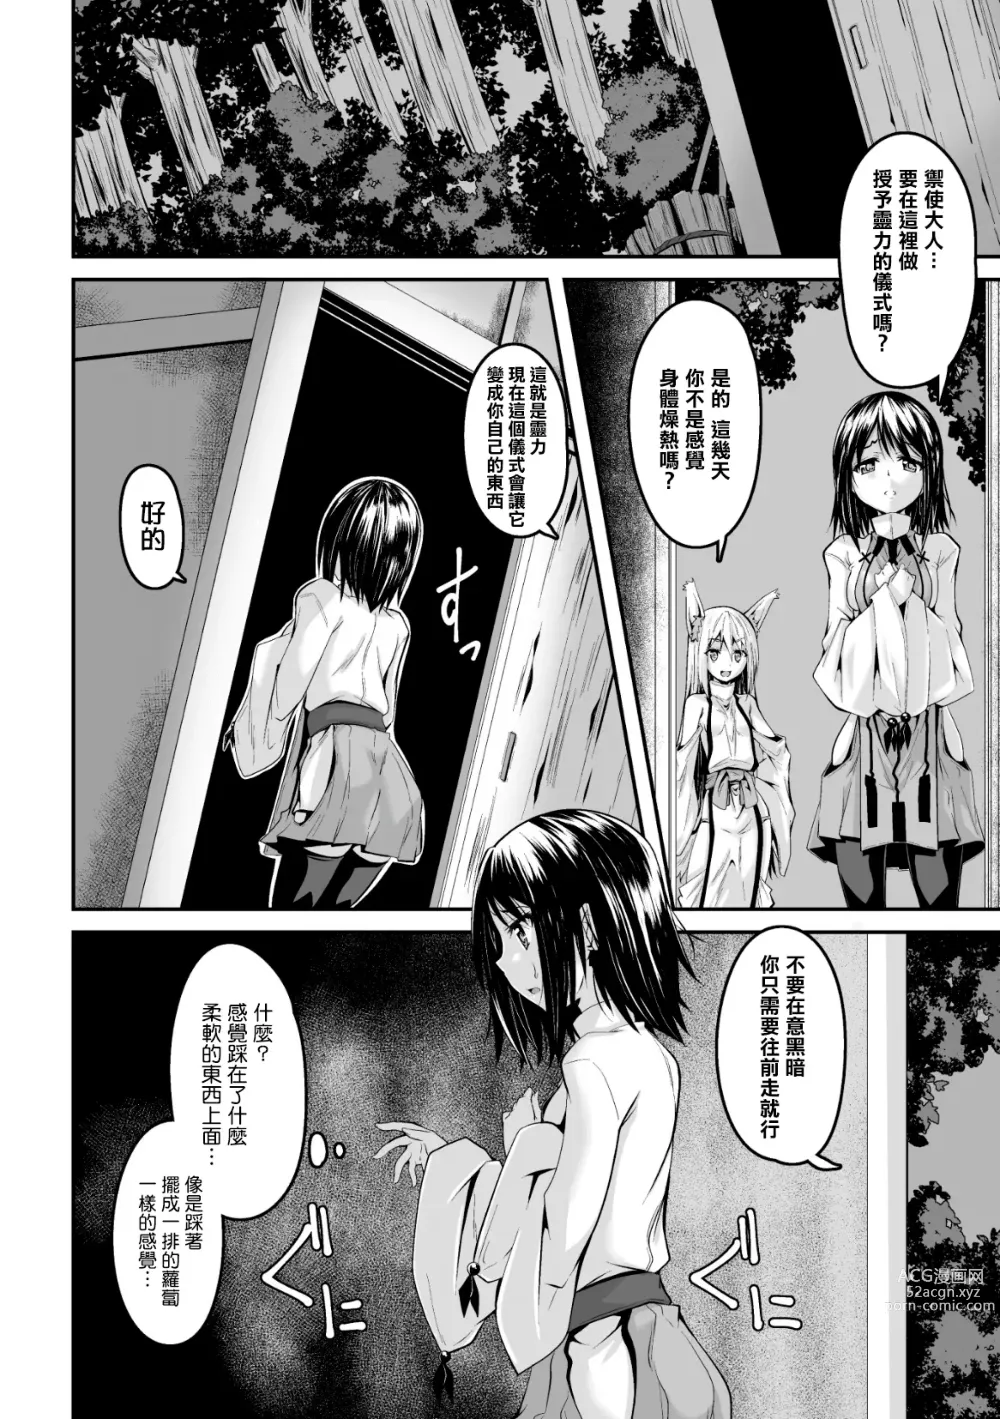 Page 7 of manga Youko Inmon Kitan 2